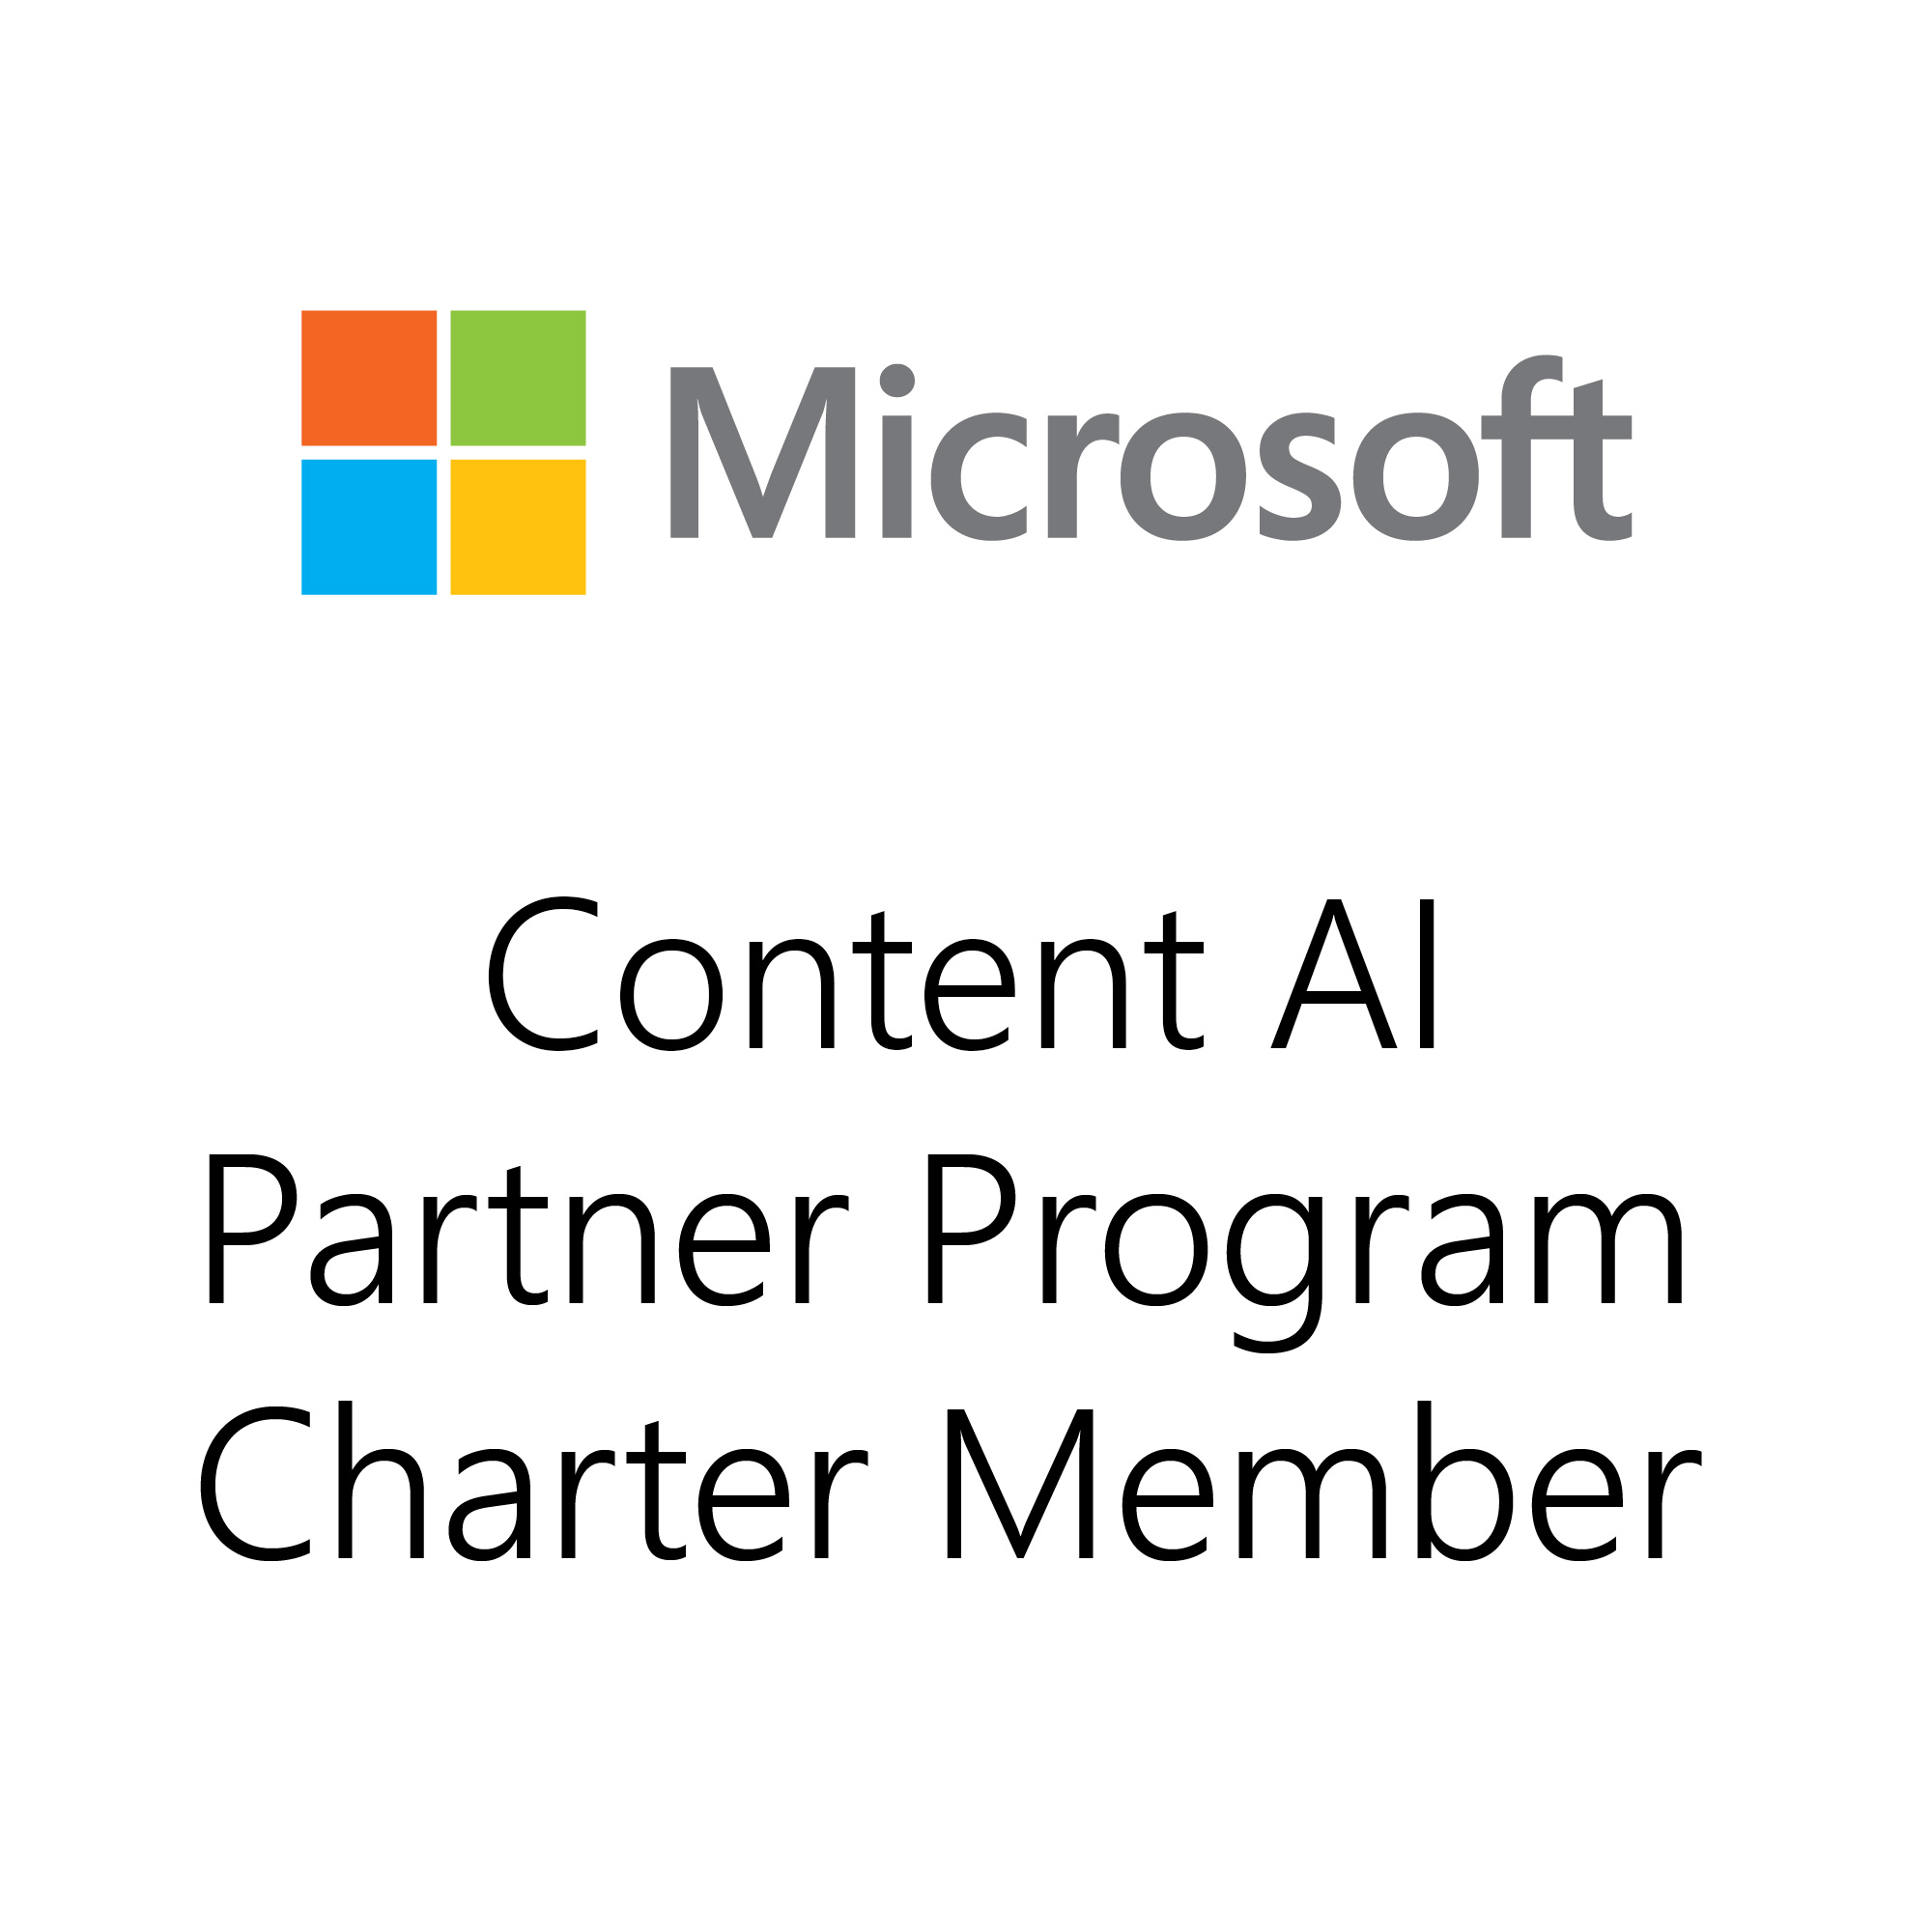 Content Ai Partner Program Charter Member